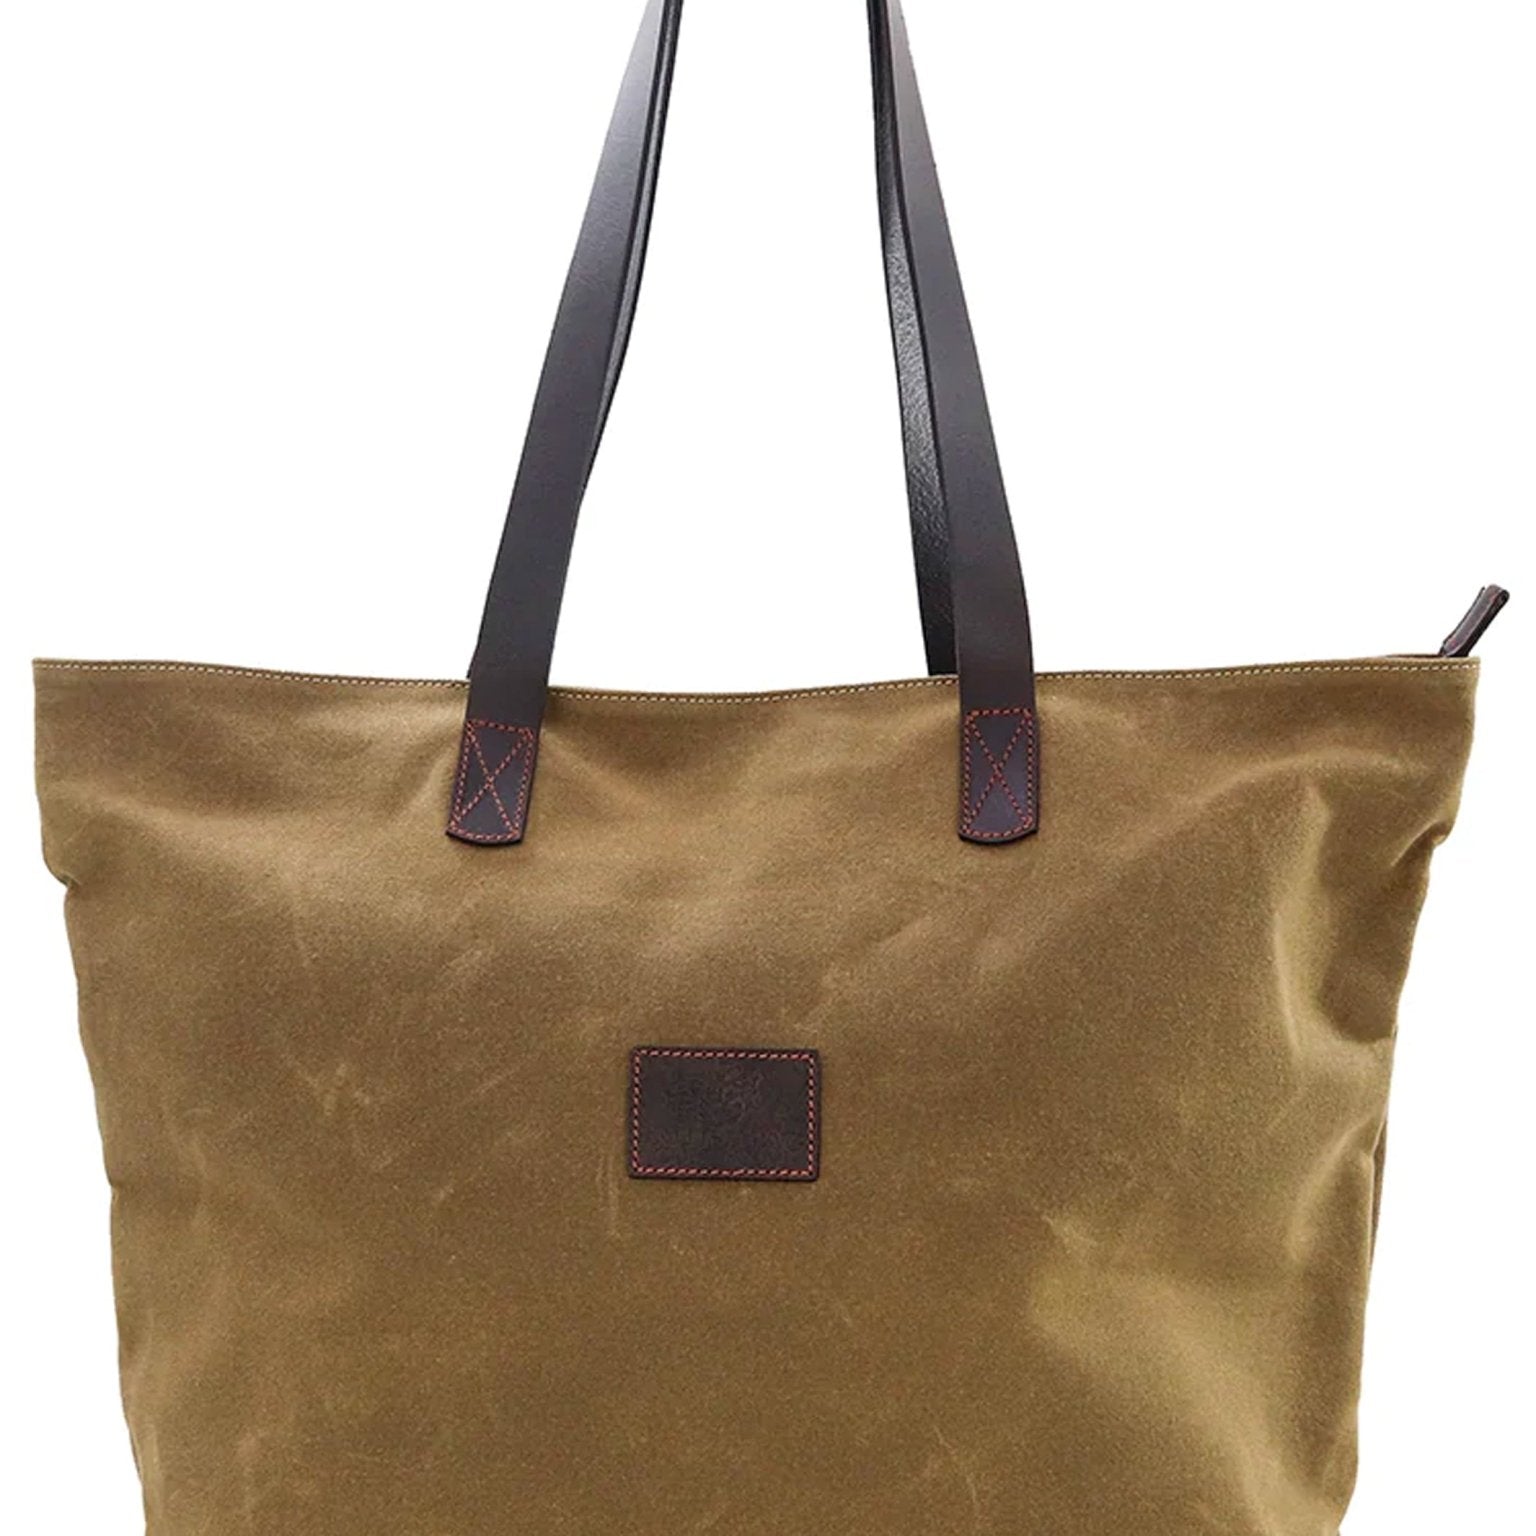 4elementsclothingThe British Bag CompanyBritish Bag Company - Waxed Canvas Tote Bag - Premium weight leather trim tote bagBag710352